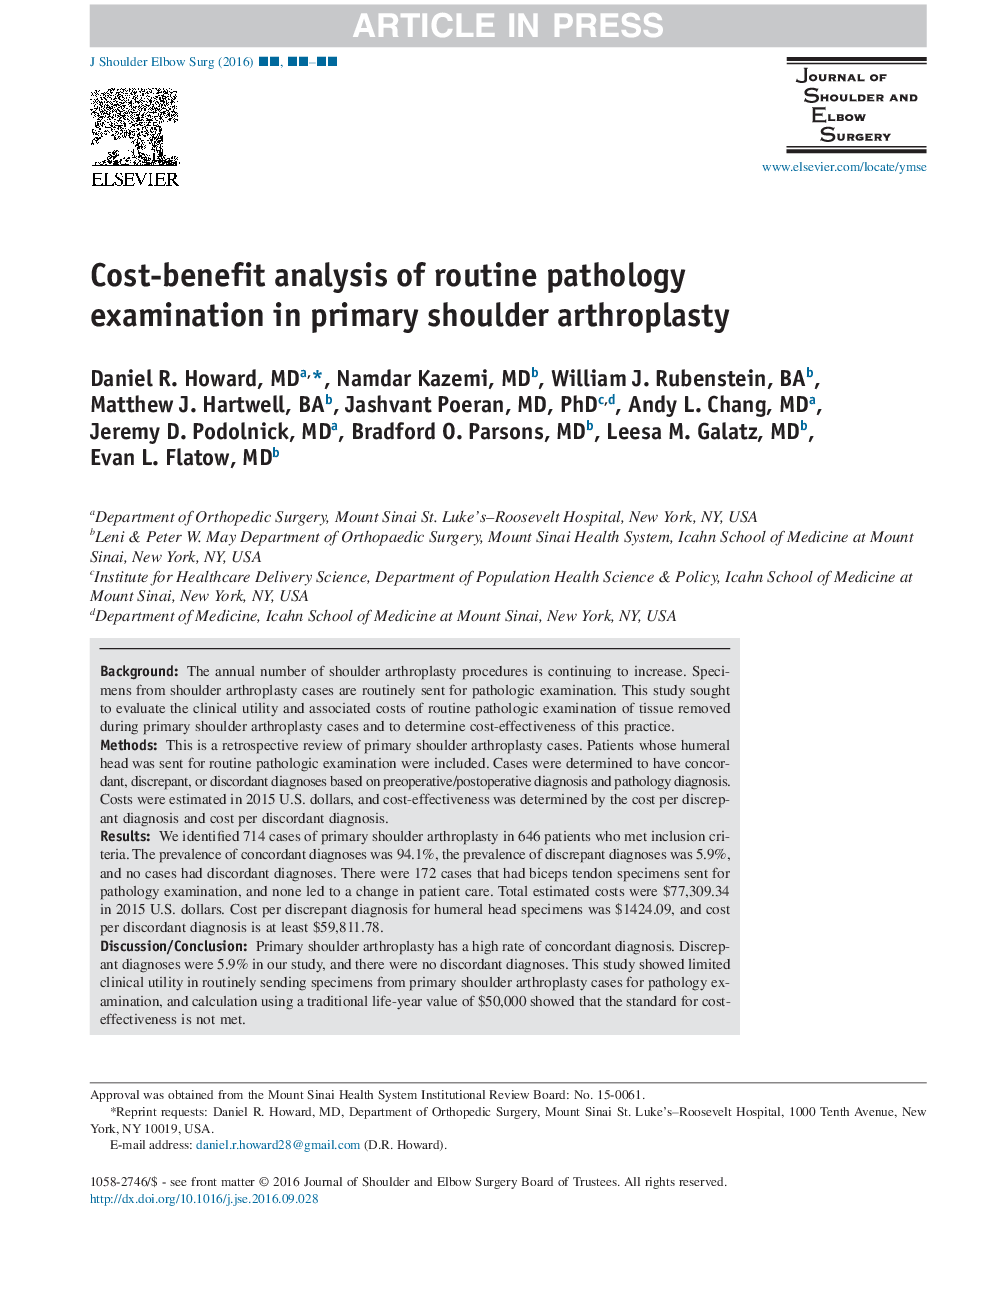 Cost-benefit analysis of routine pathology examination in primary shoulder arthroplasty